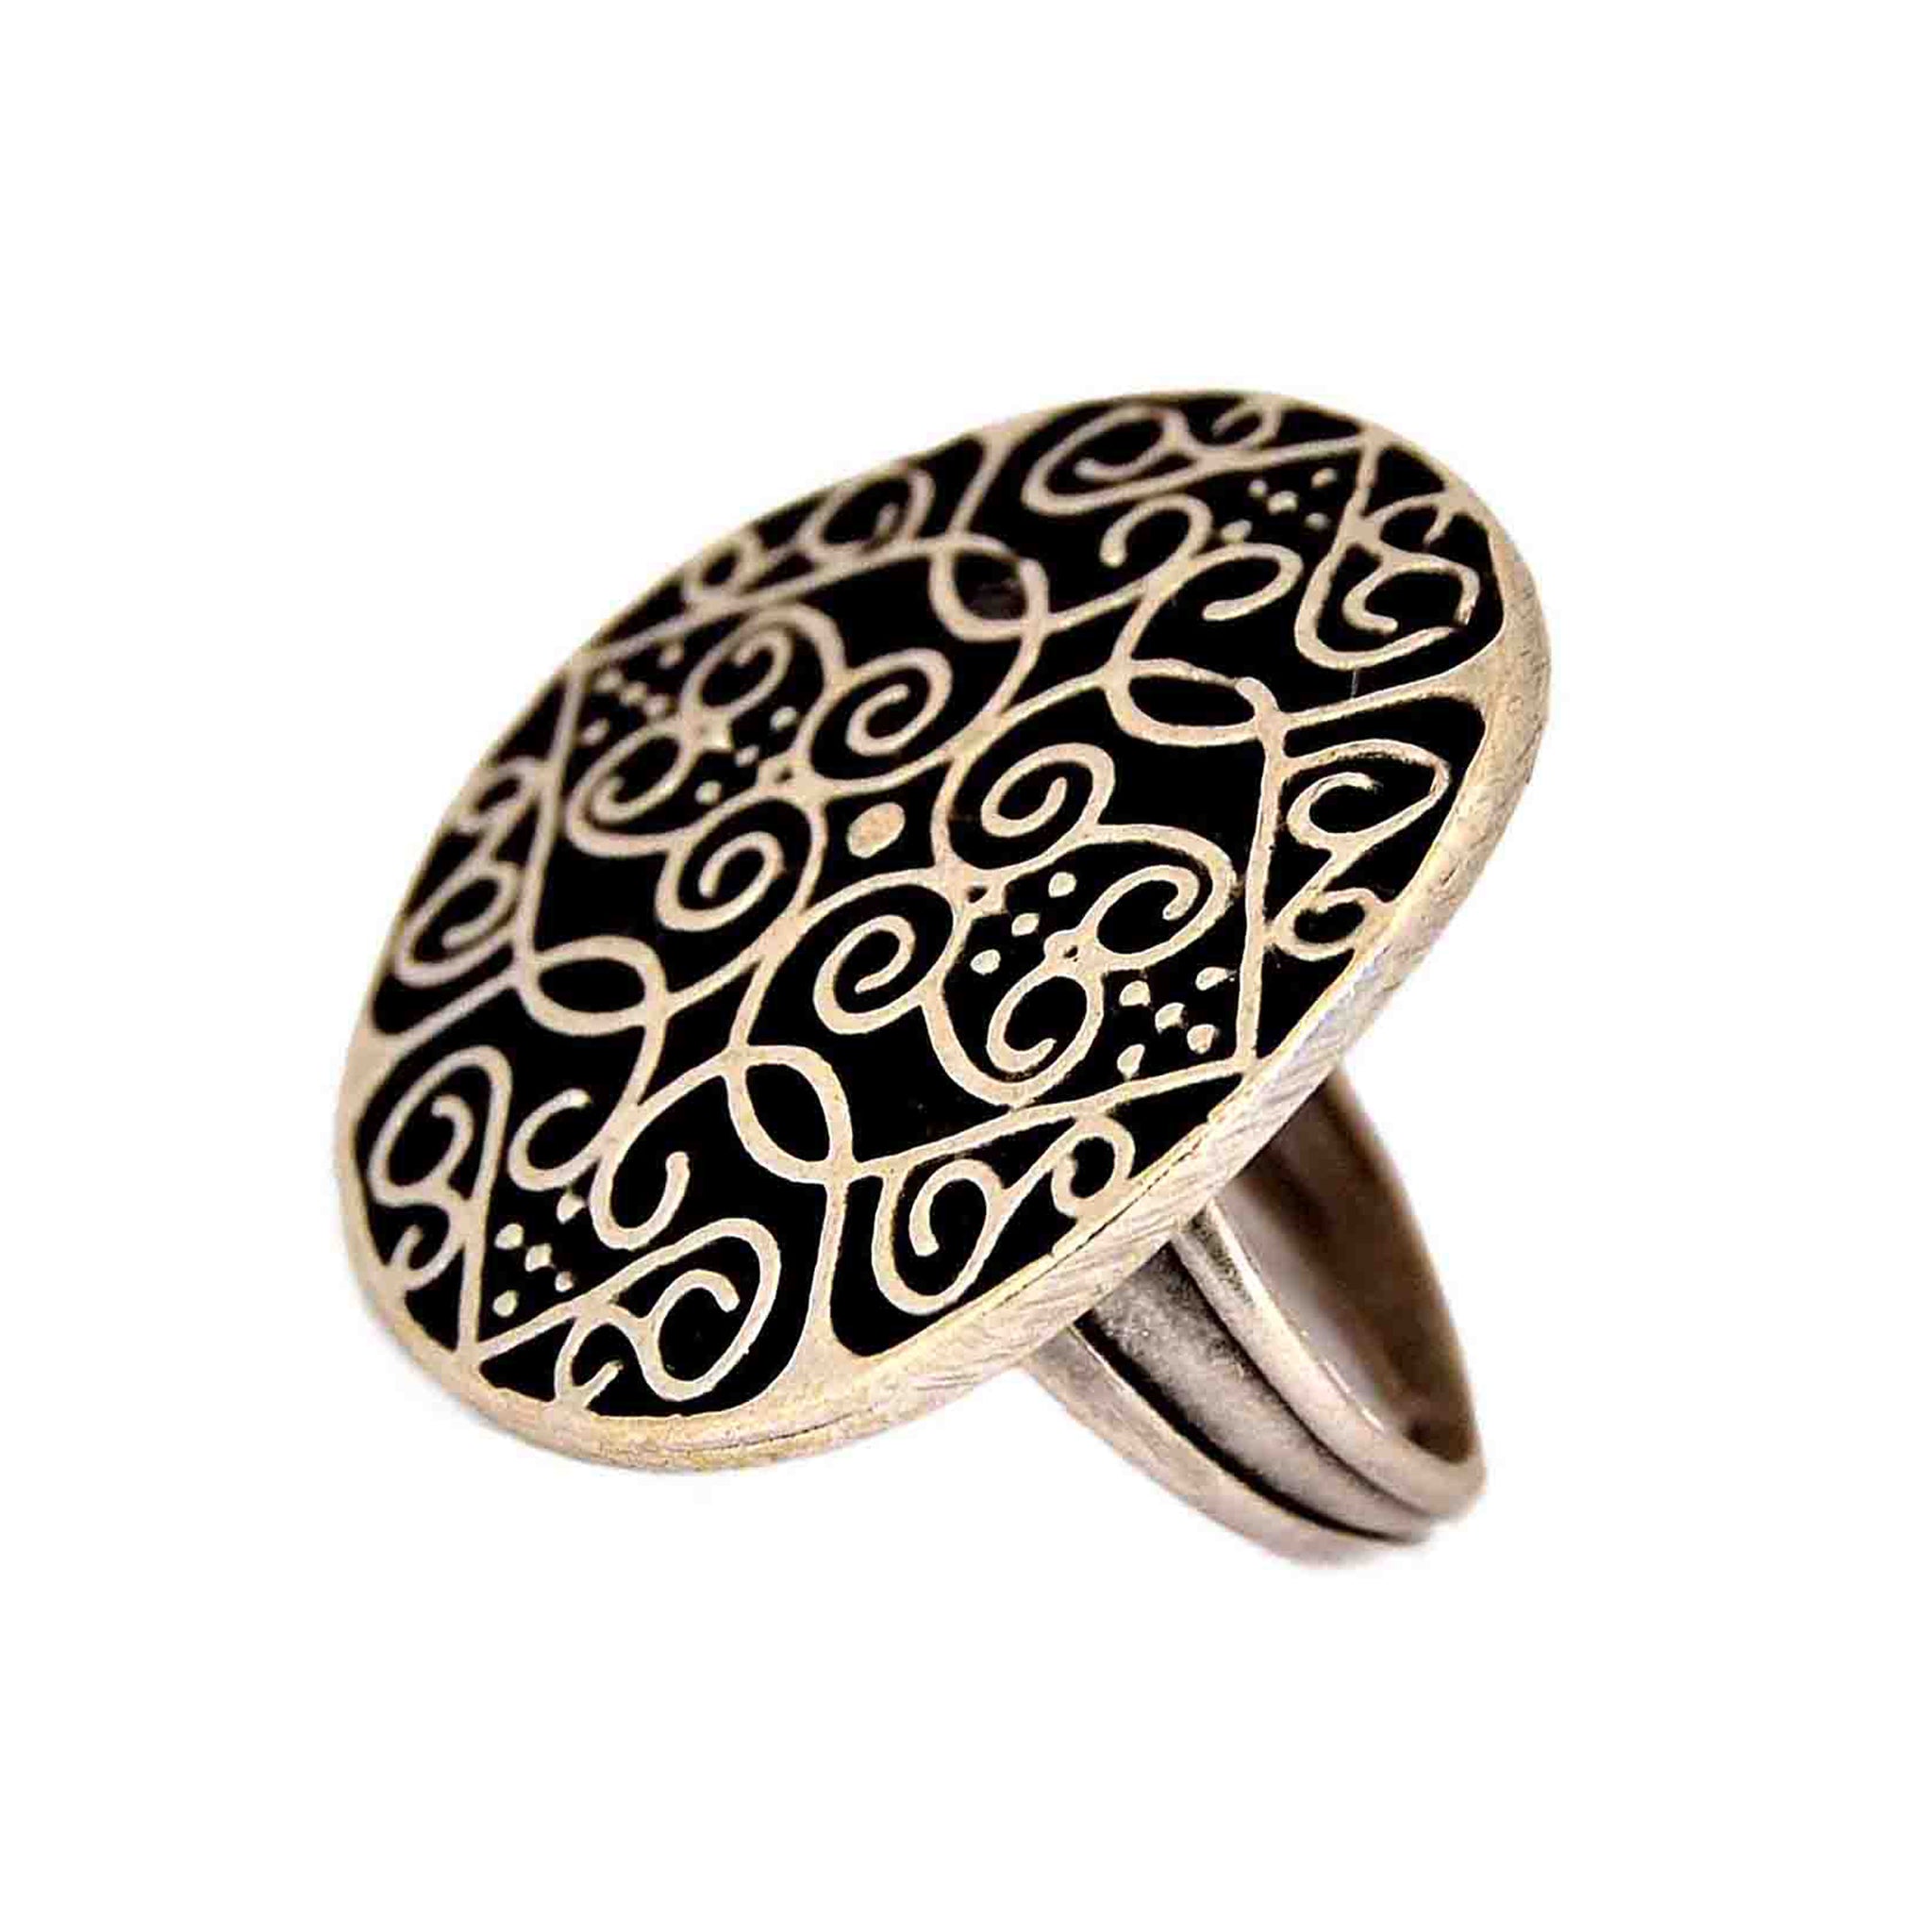 Matt silver ring with celtic pattern